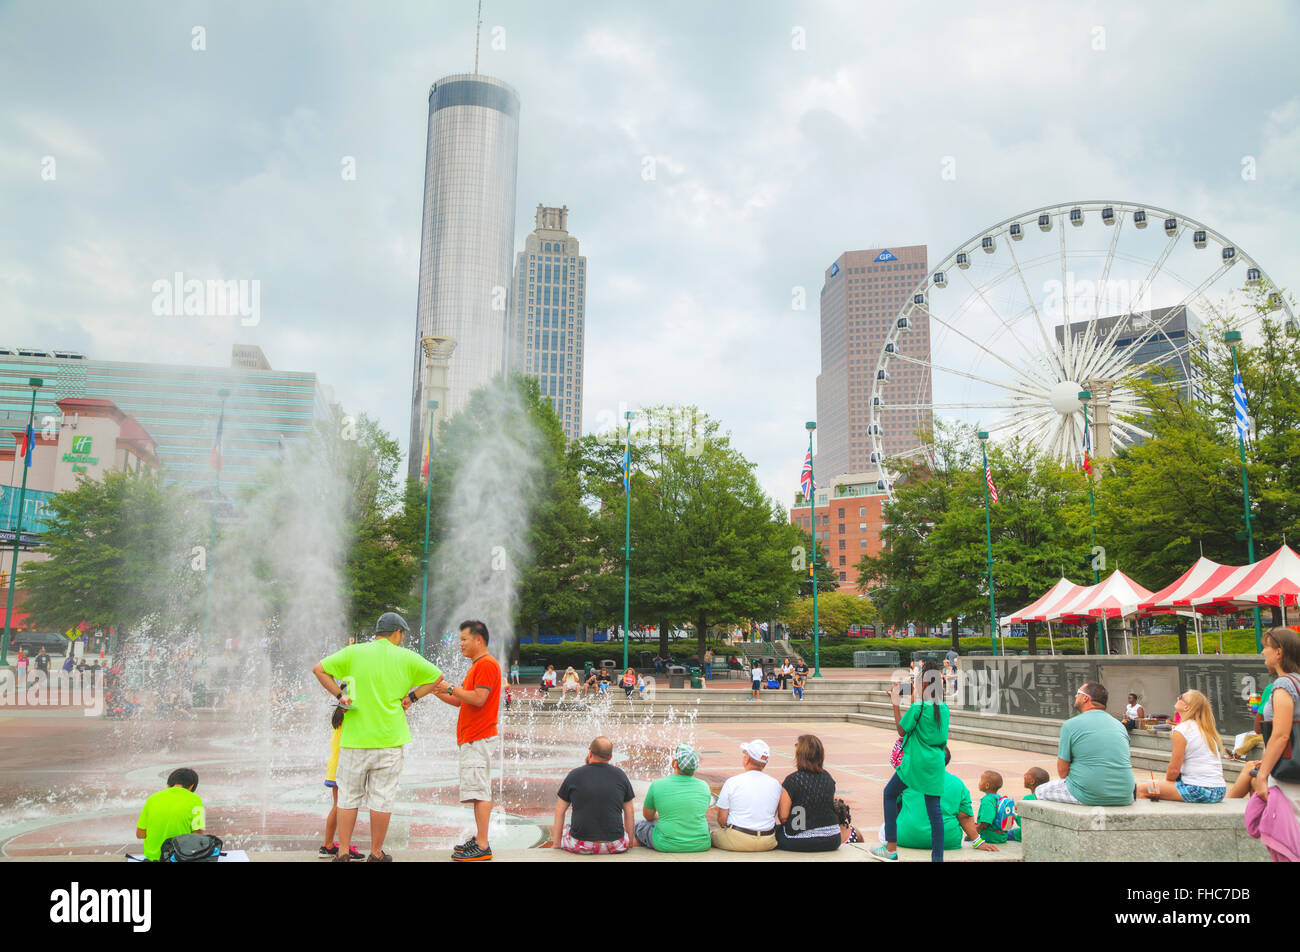 ATLANTA - 29 agosto: Centennial Olympic Park con le persone su agosto 29, 2015 in Atlanta, GA. Foto Stock